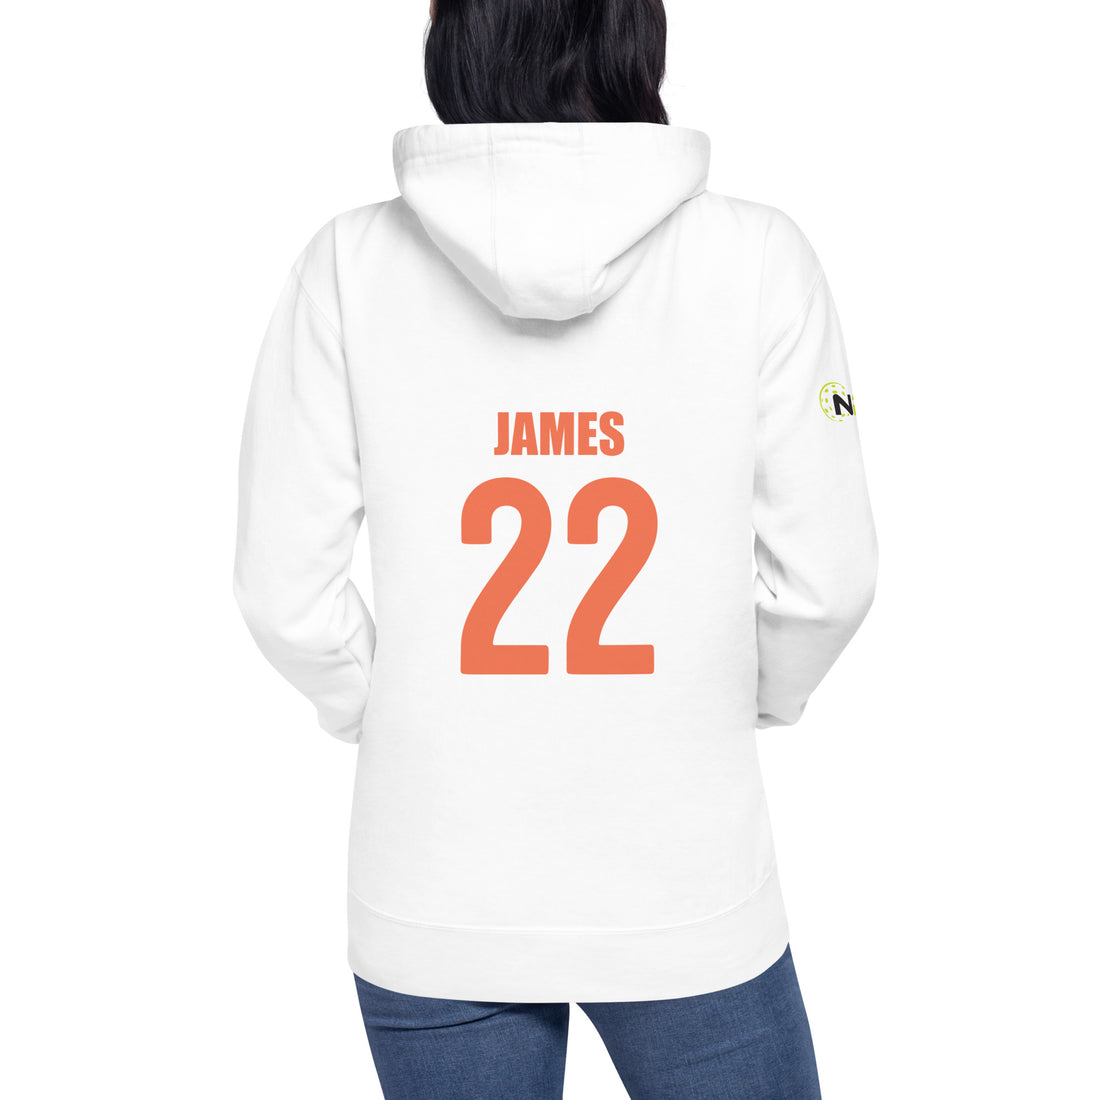 Julene James 22 Naples JBB United™ Premium Hoodie - White